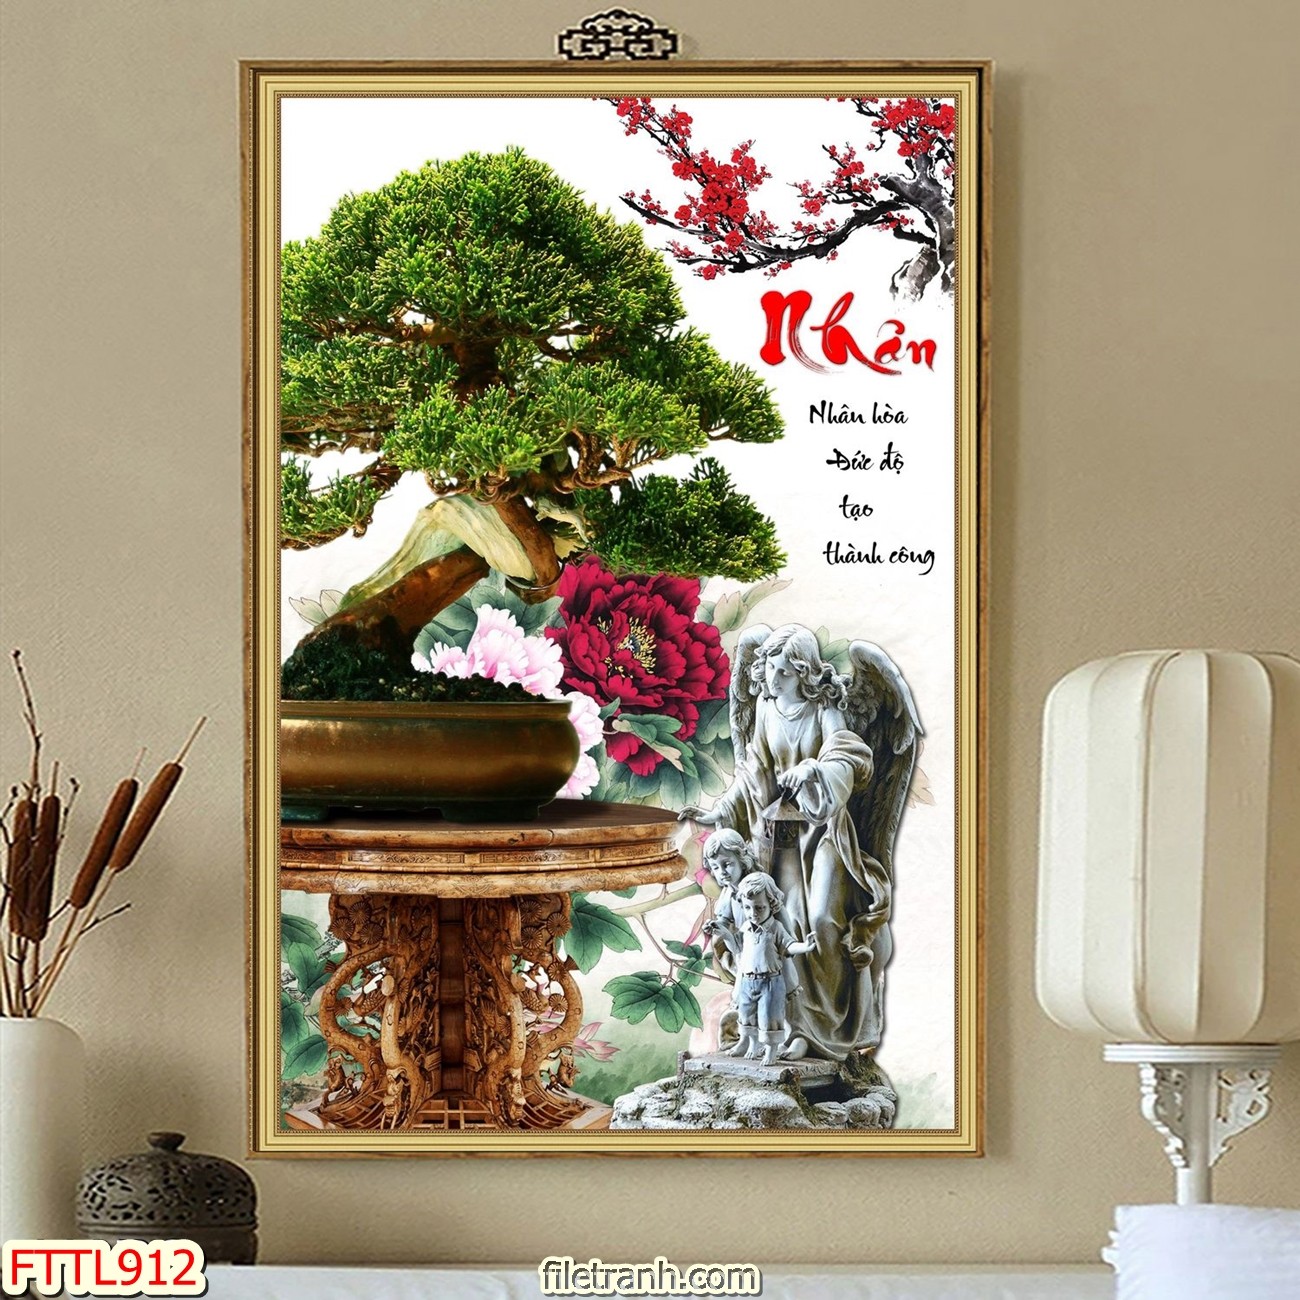 http://filetranh.com/file-tranh-chau-mai-bonsai/file-tranh-chau-mai-bonsai-fttl912.html